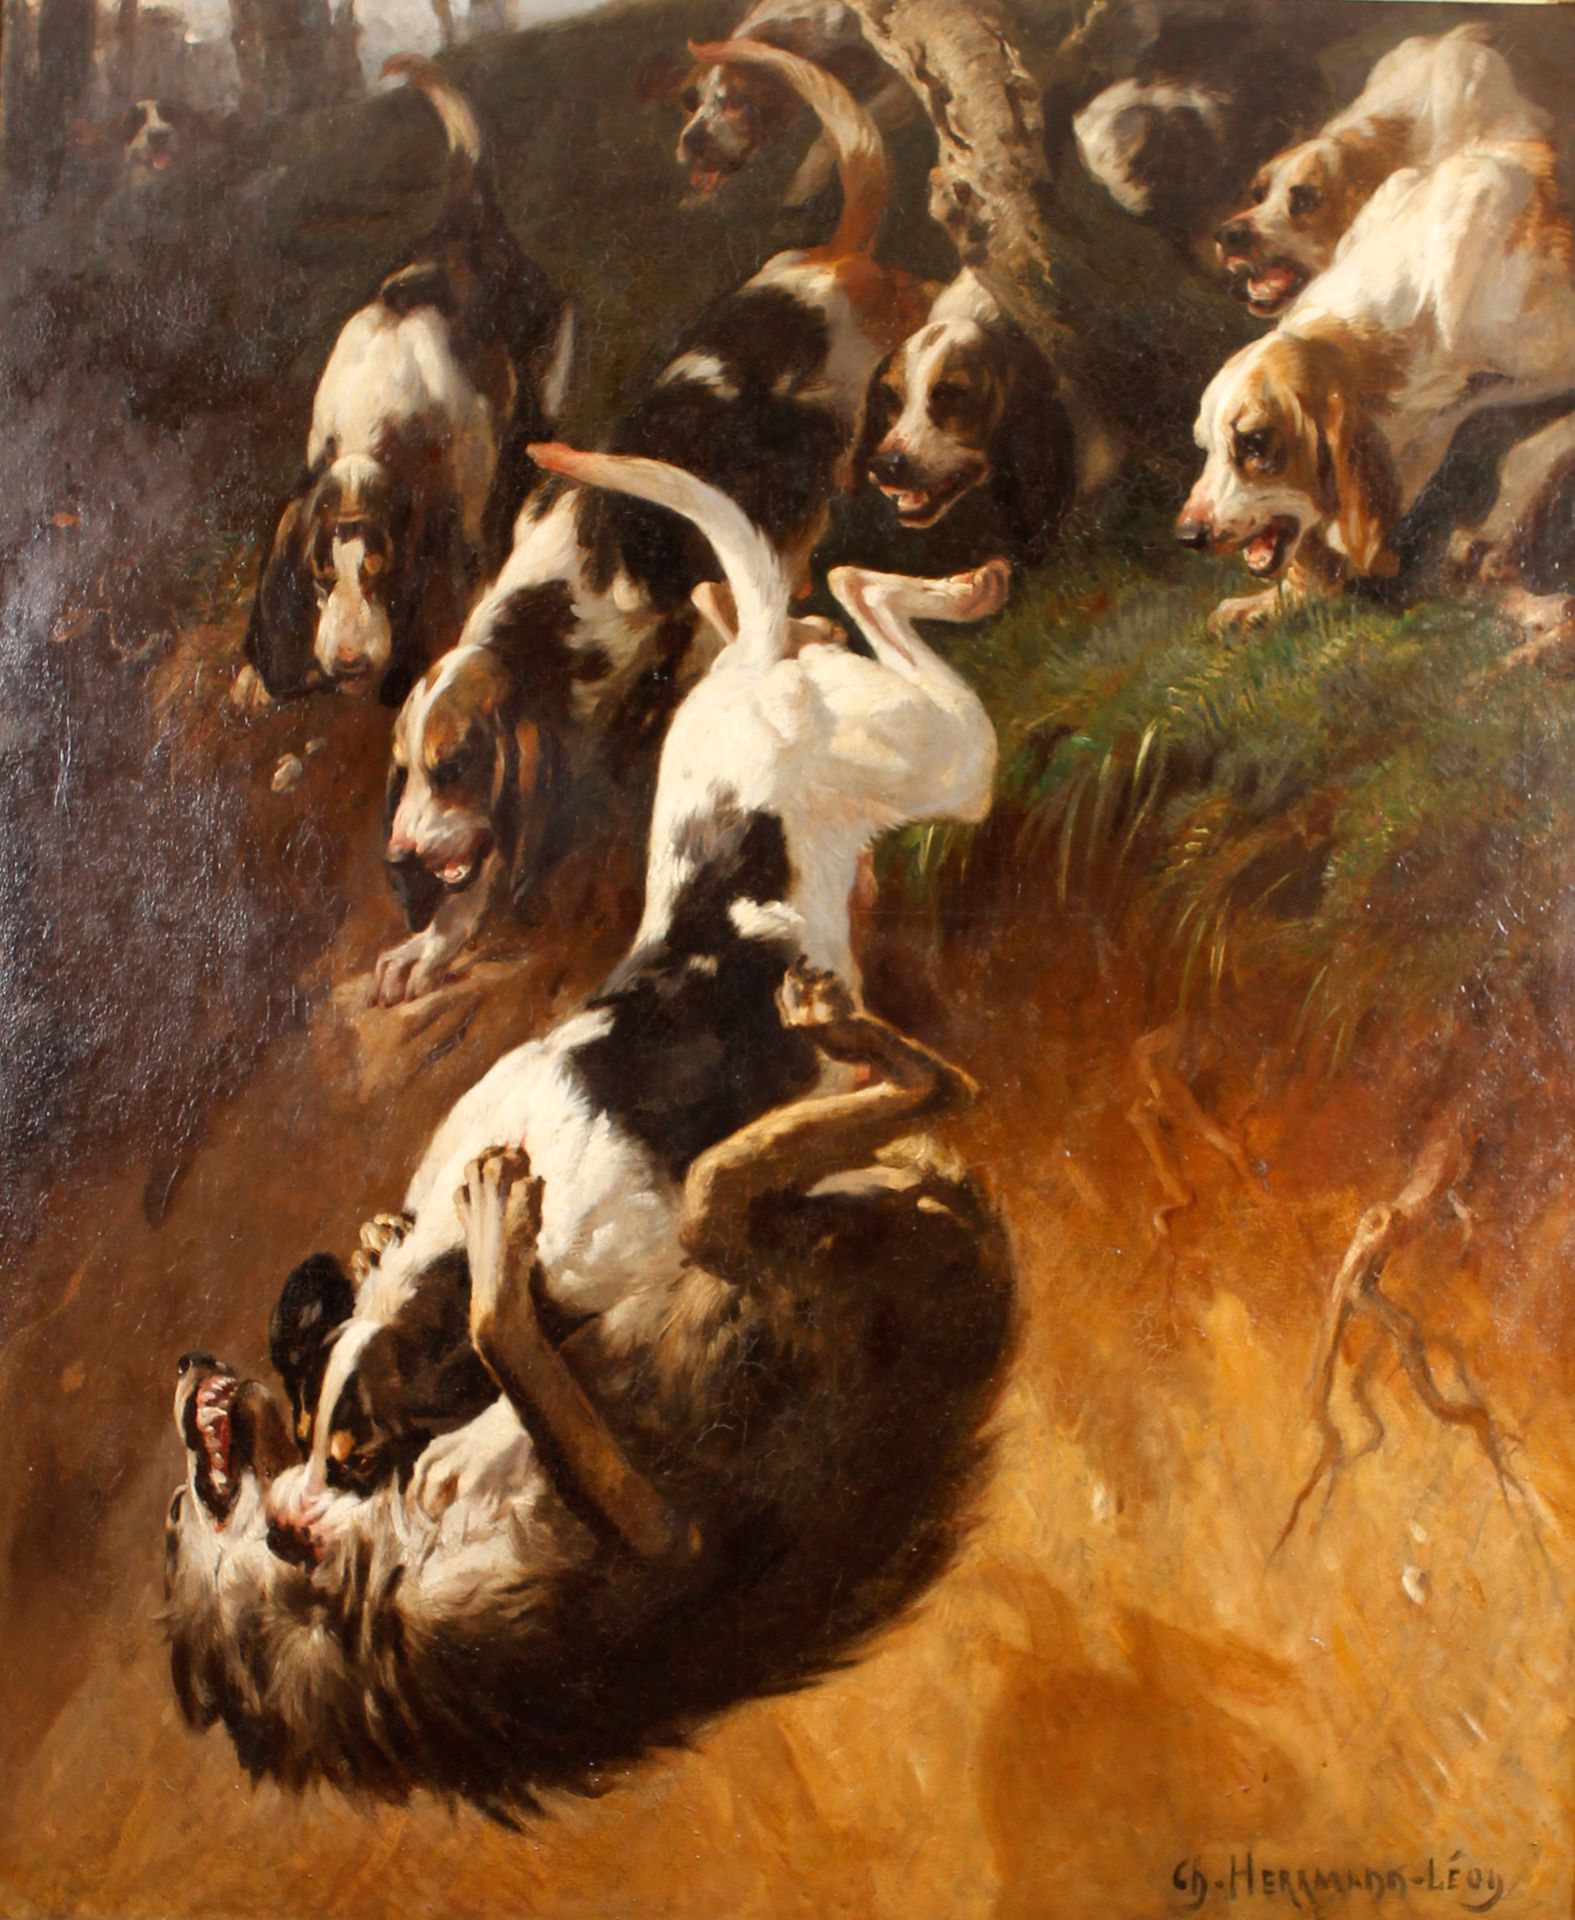 Null 赫尔曼-莱昂 (HERMANN-LEON Charles) (1838-1907)

群狗攻击狼

布面油画，右下方有签名。

木质框架和镀金灰泥，带&hellip;